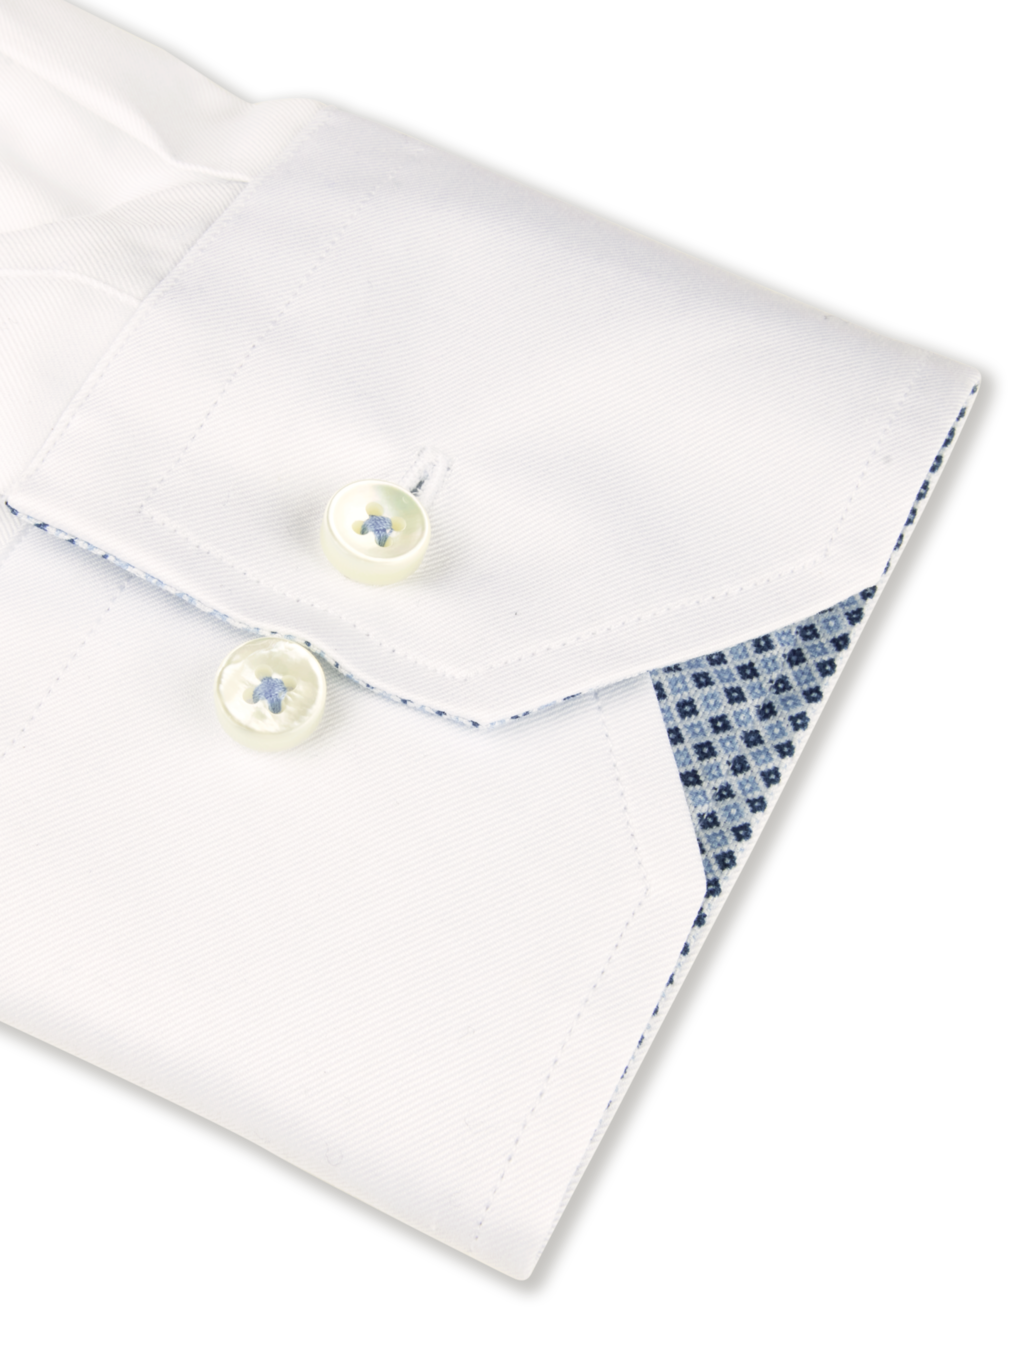 Stenströms White Geometric Contrast Twill Shirt